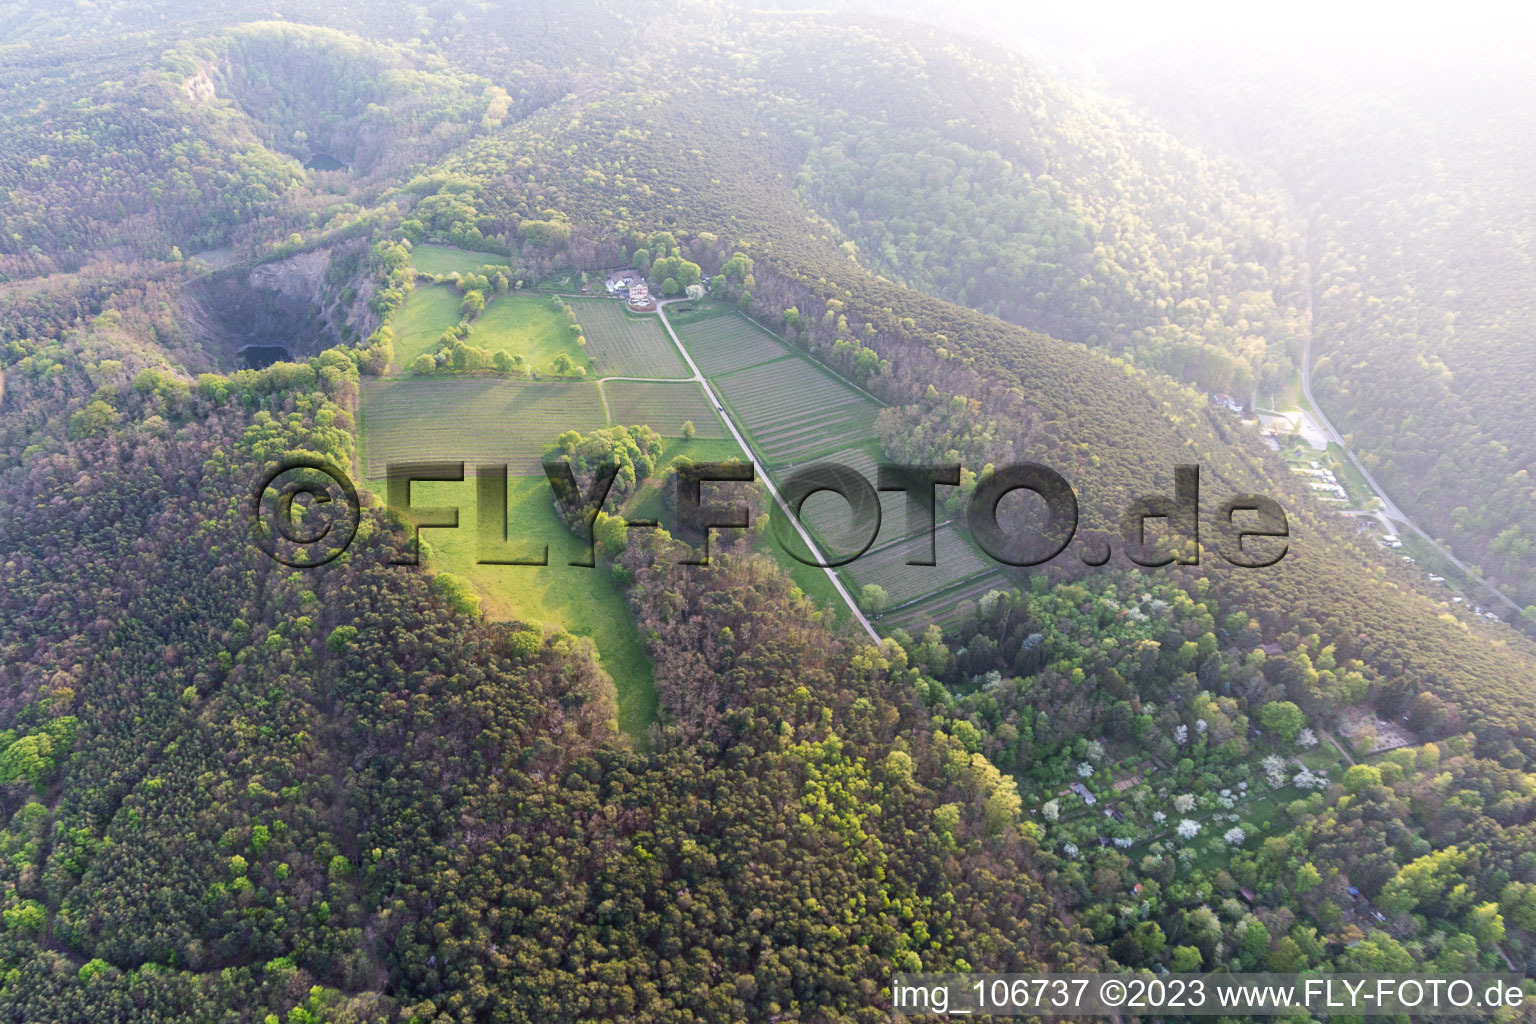 Aerial photograpy of Wachenheim an der Weinstraße in the state Rhineland-Palatinate, Germany